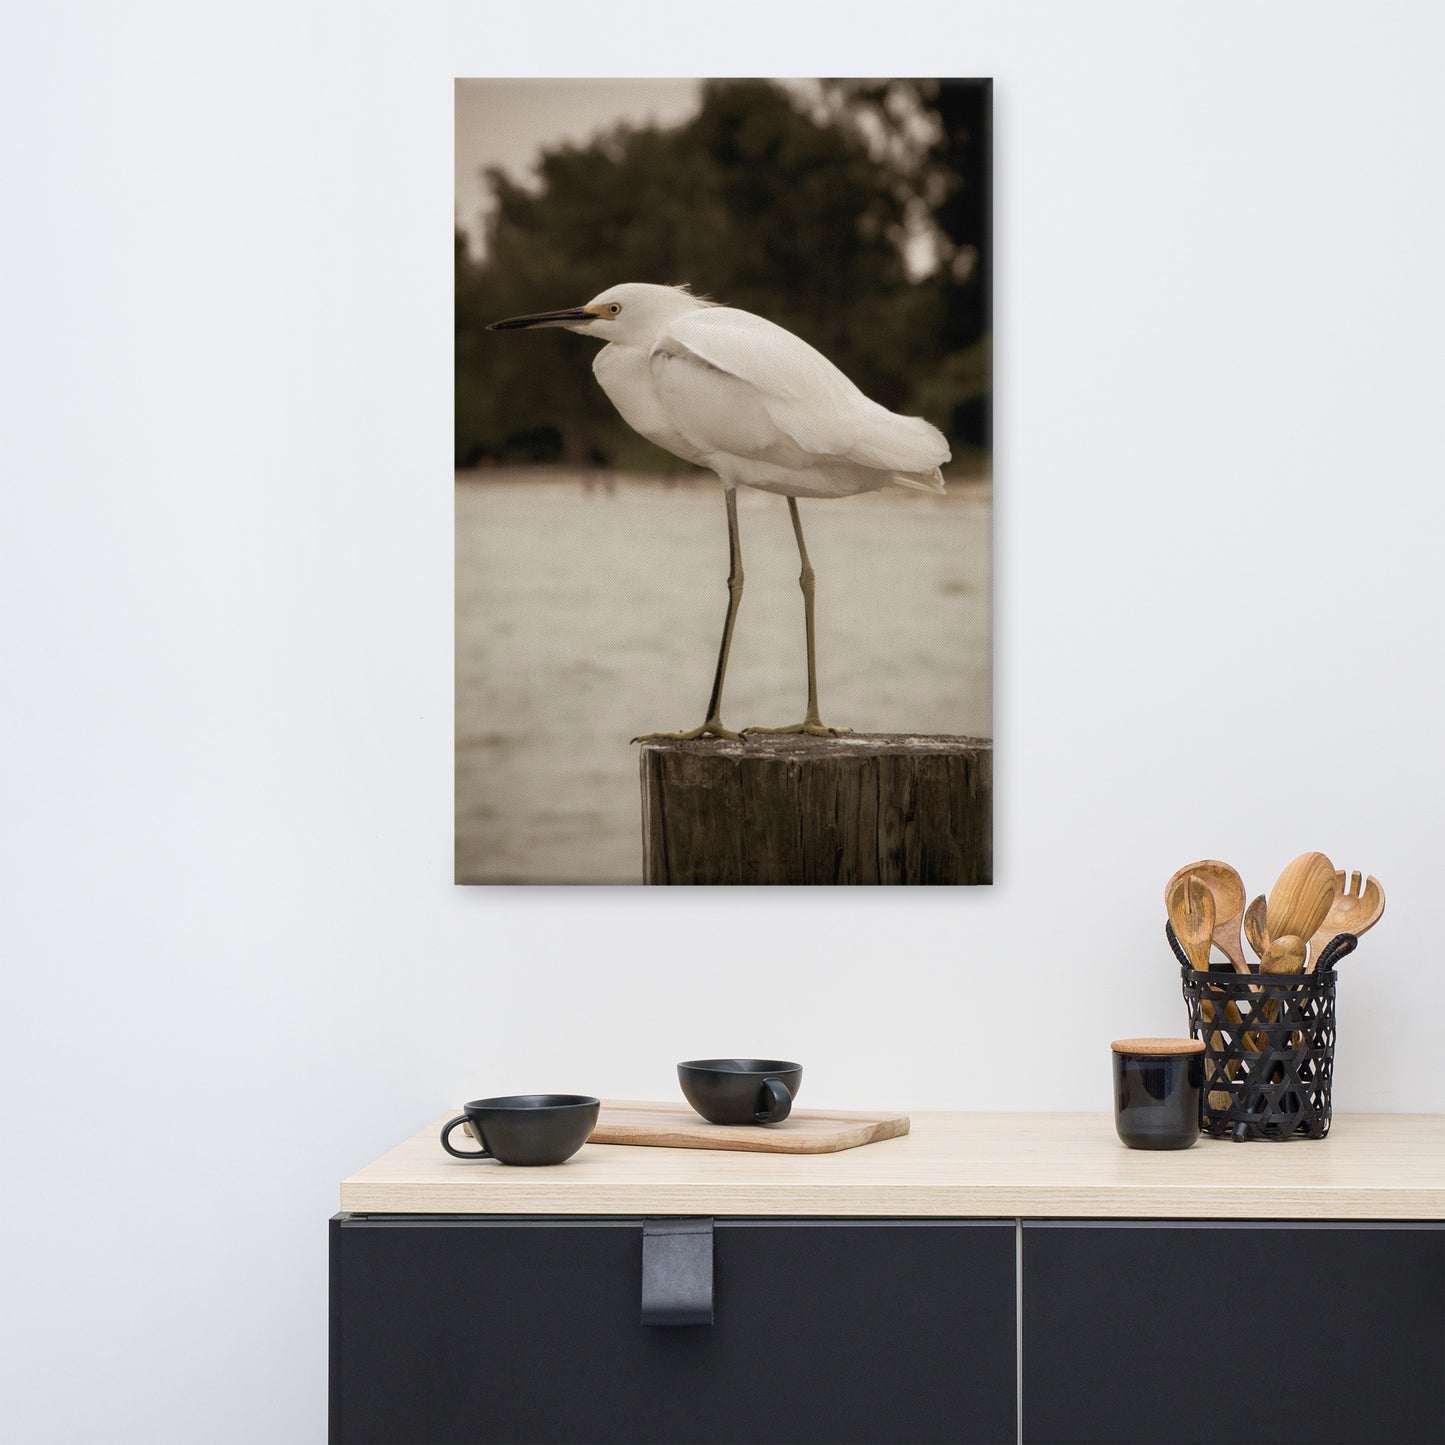 Wall Art Dining Room Ideas: Sepia Coastal - Bird - Snowy Egret on Pillar / Animal / Wildlife Nature Canvas Photographic Wall Art Print - Artwork